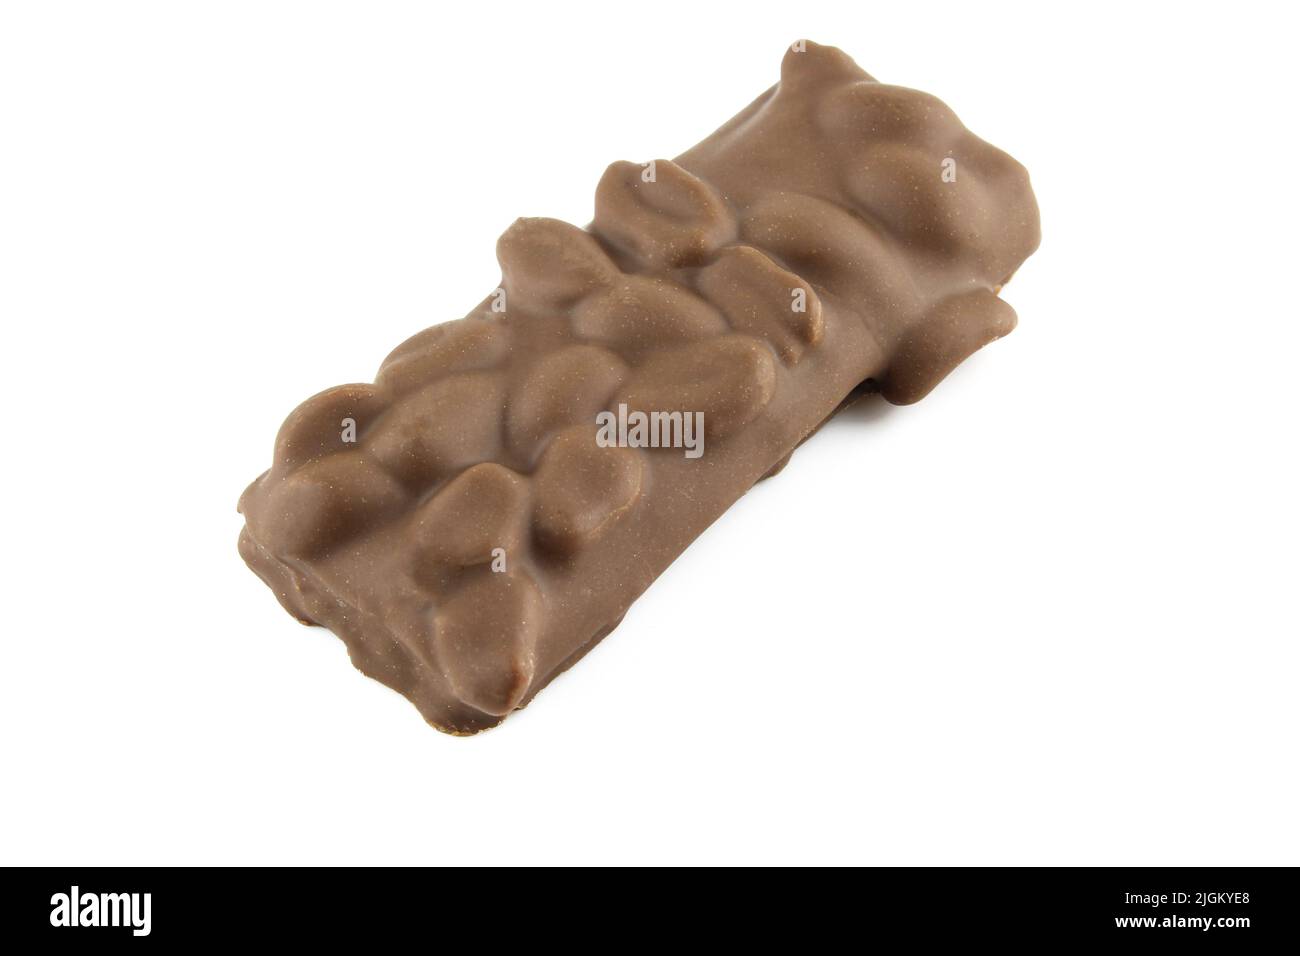 Snack bar de chocolate lleno de cacahuetes enteros aislados sobre fondo blanco Foto de stock